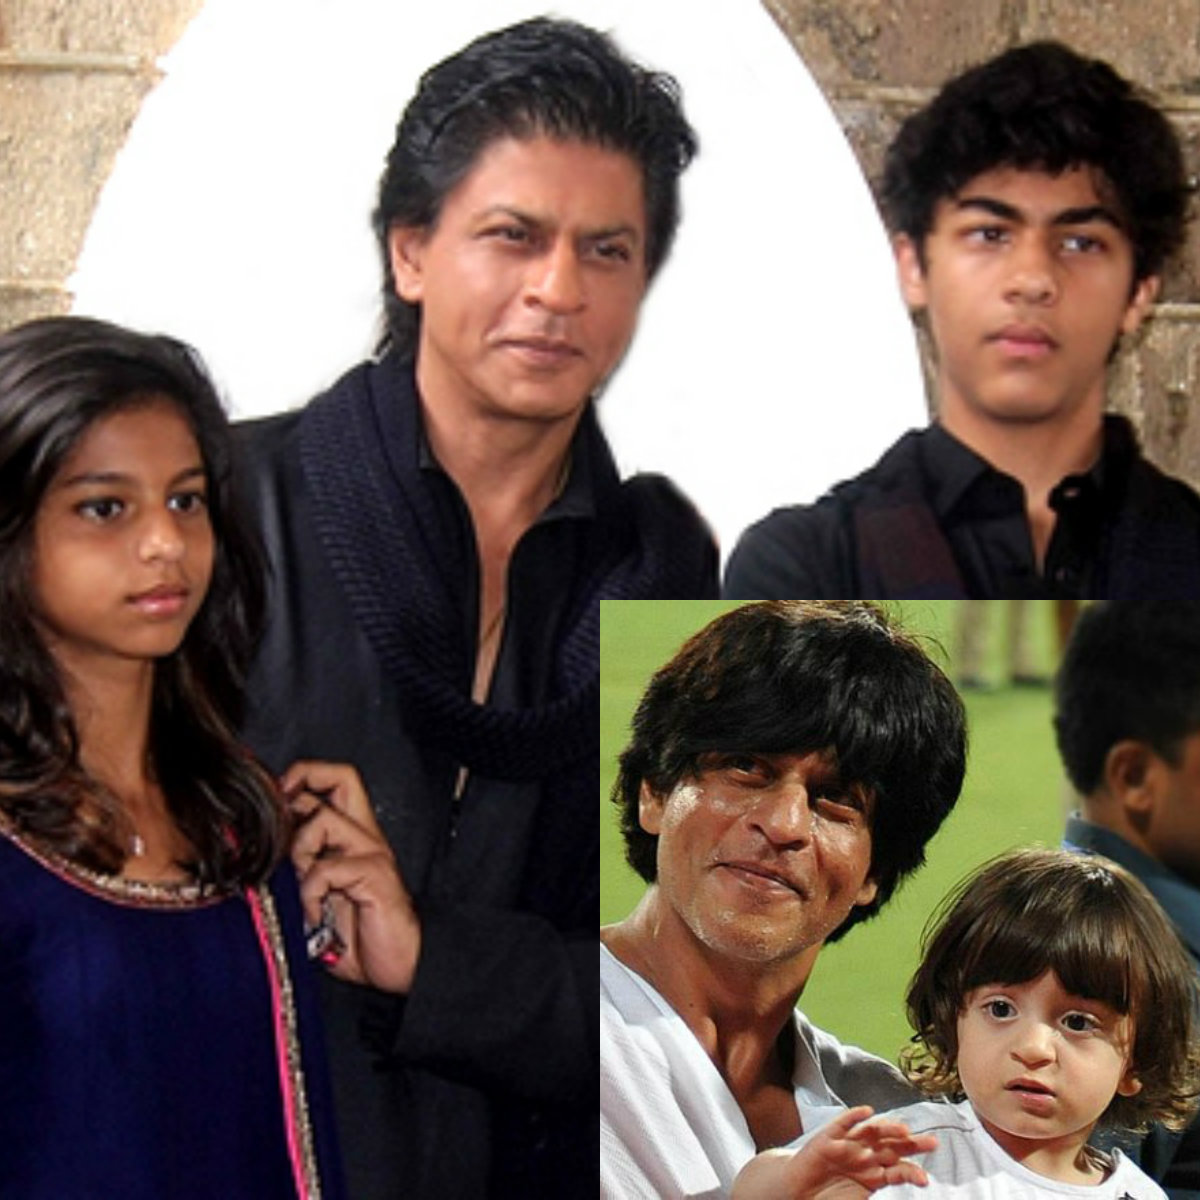 Shah Rukh Khan with his kids